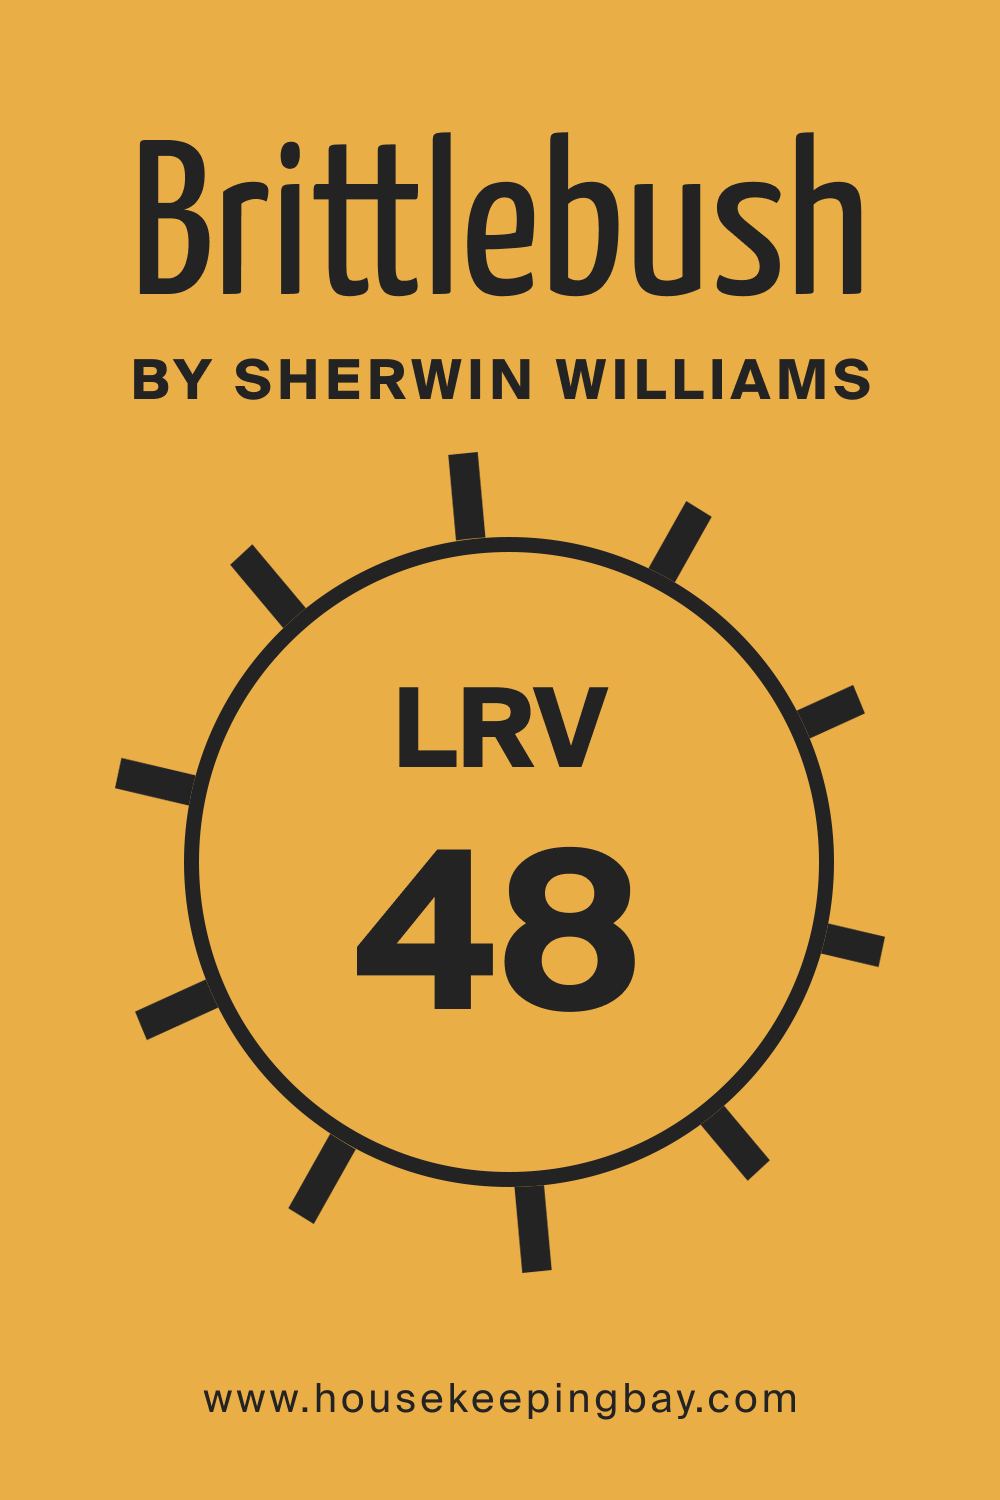 Brittlebush SW 6684 by Sherwin Williams. LRV 48